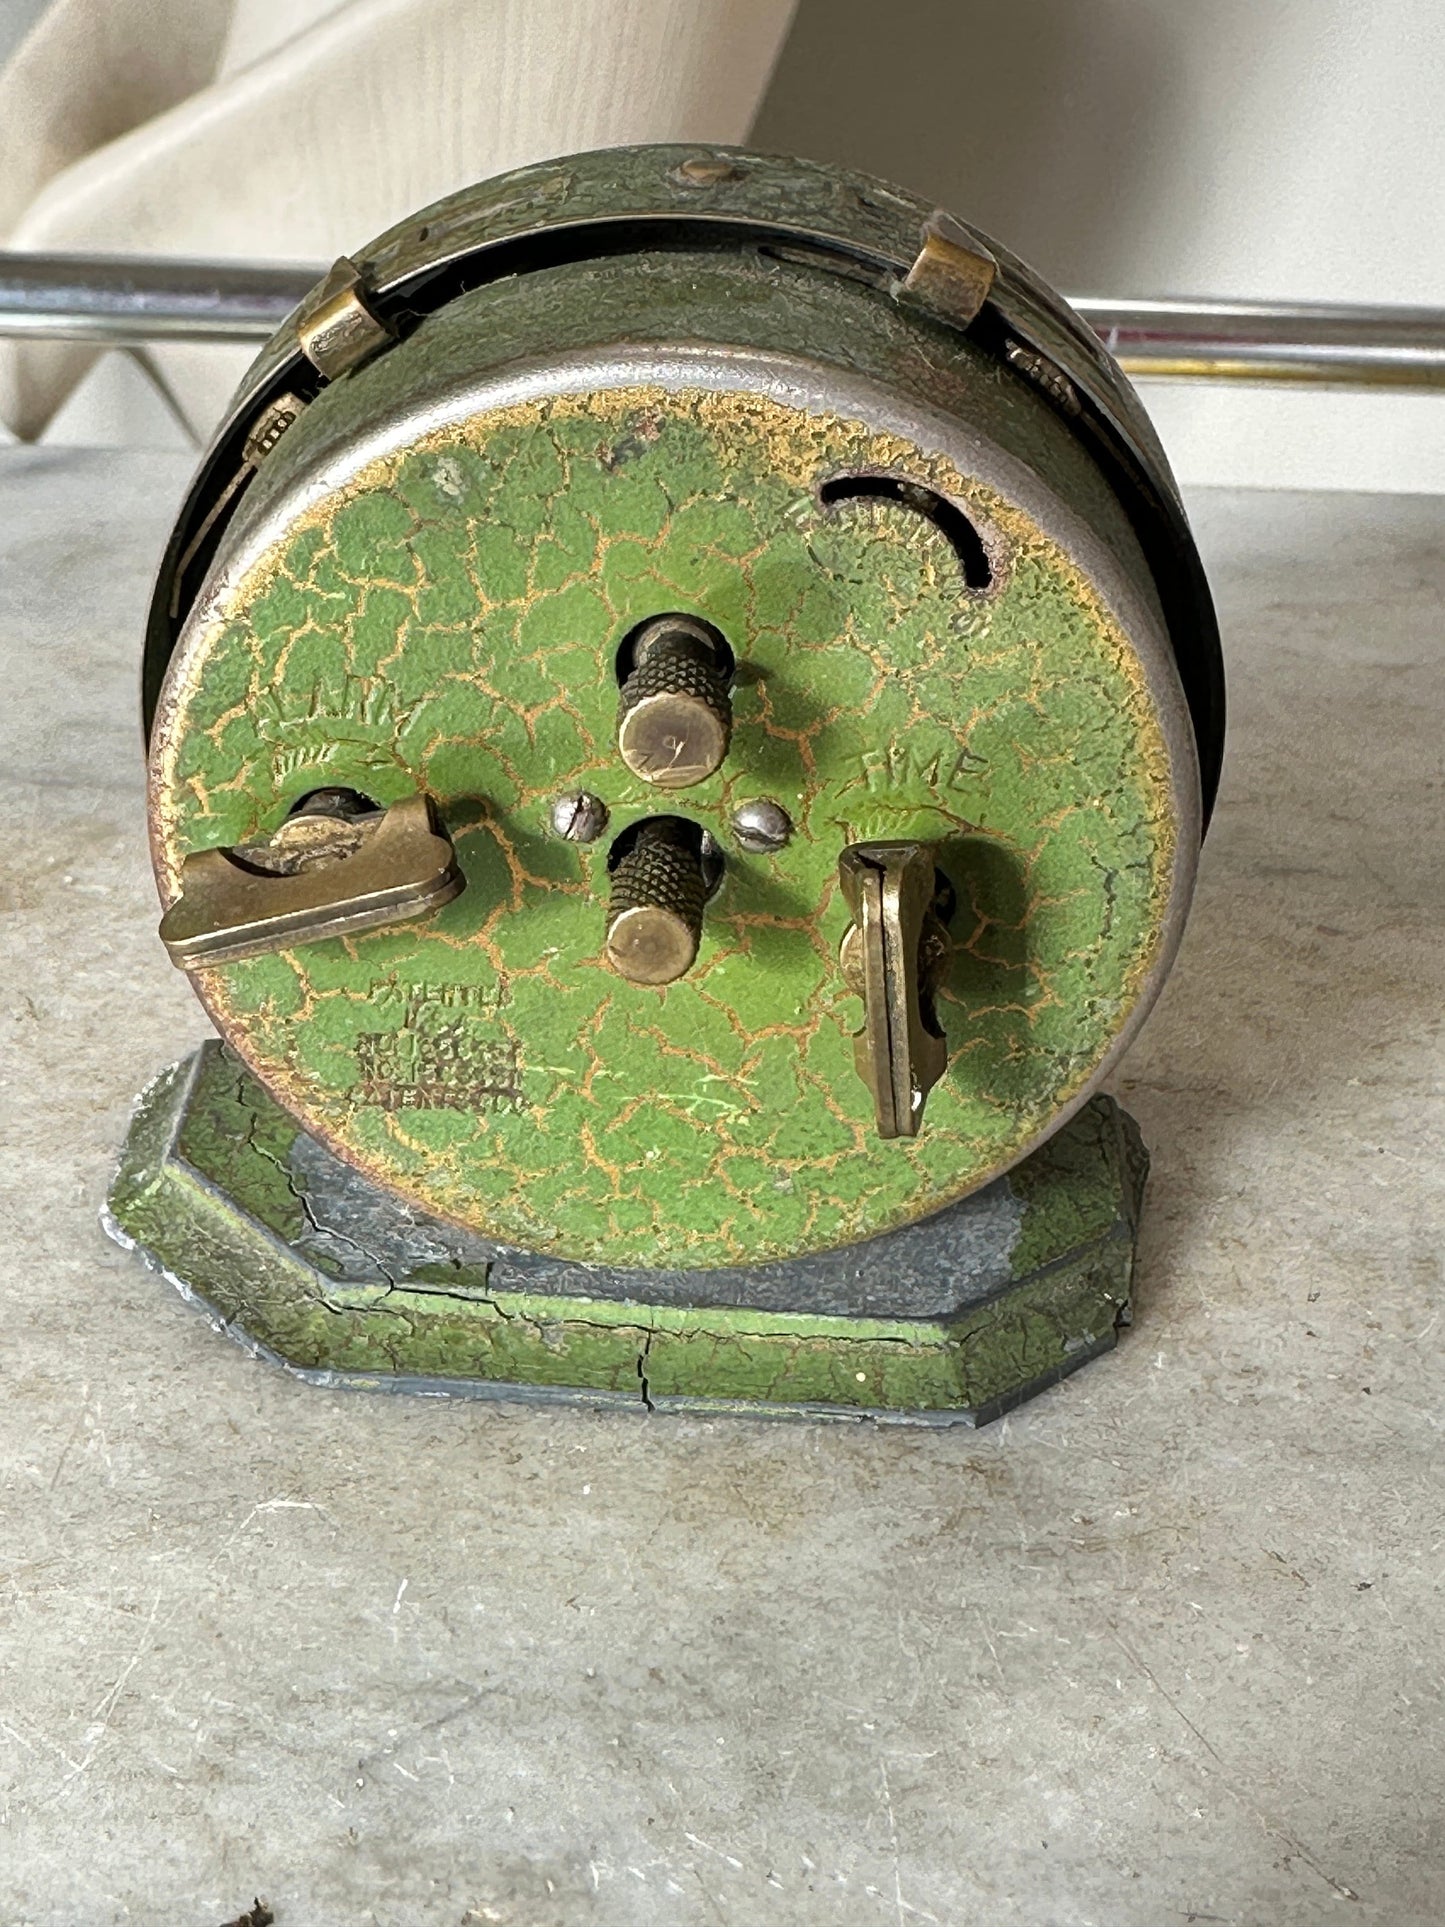 Antique 1927 Green w/Gold Face Westclox Baby Ben De Luxe Alarm Clock -Working